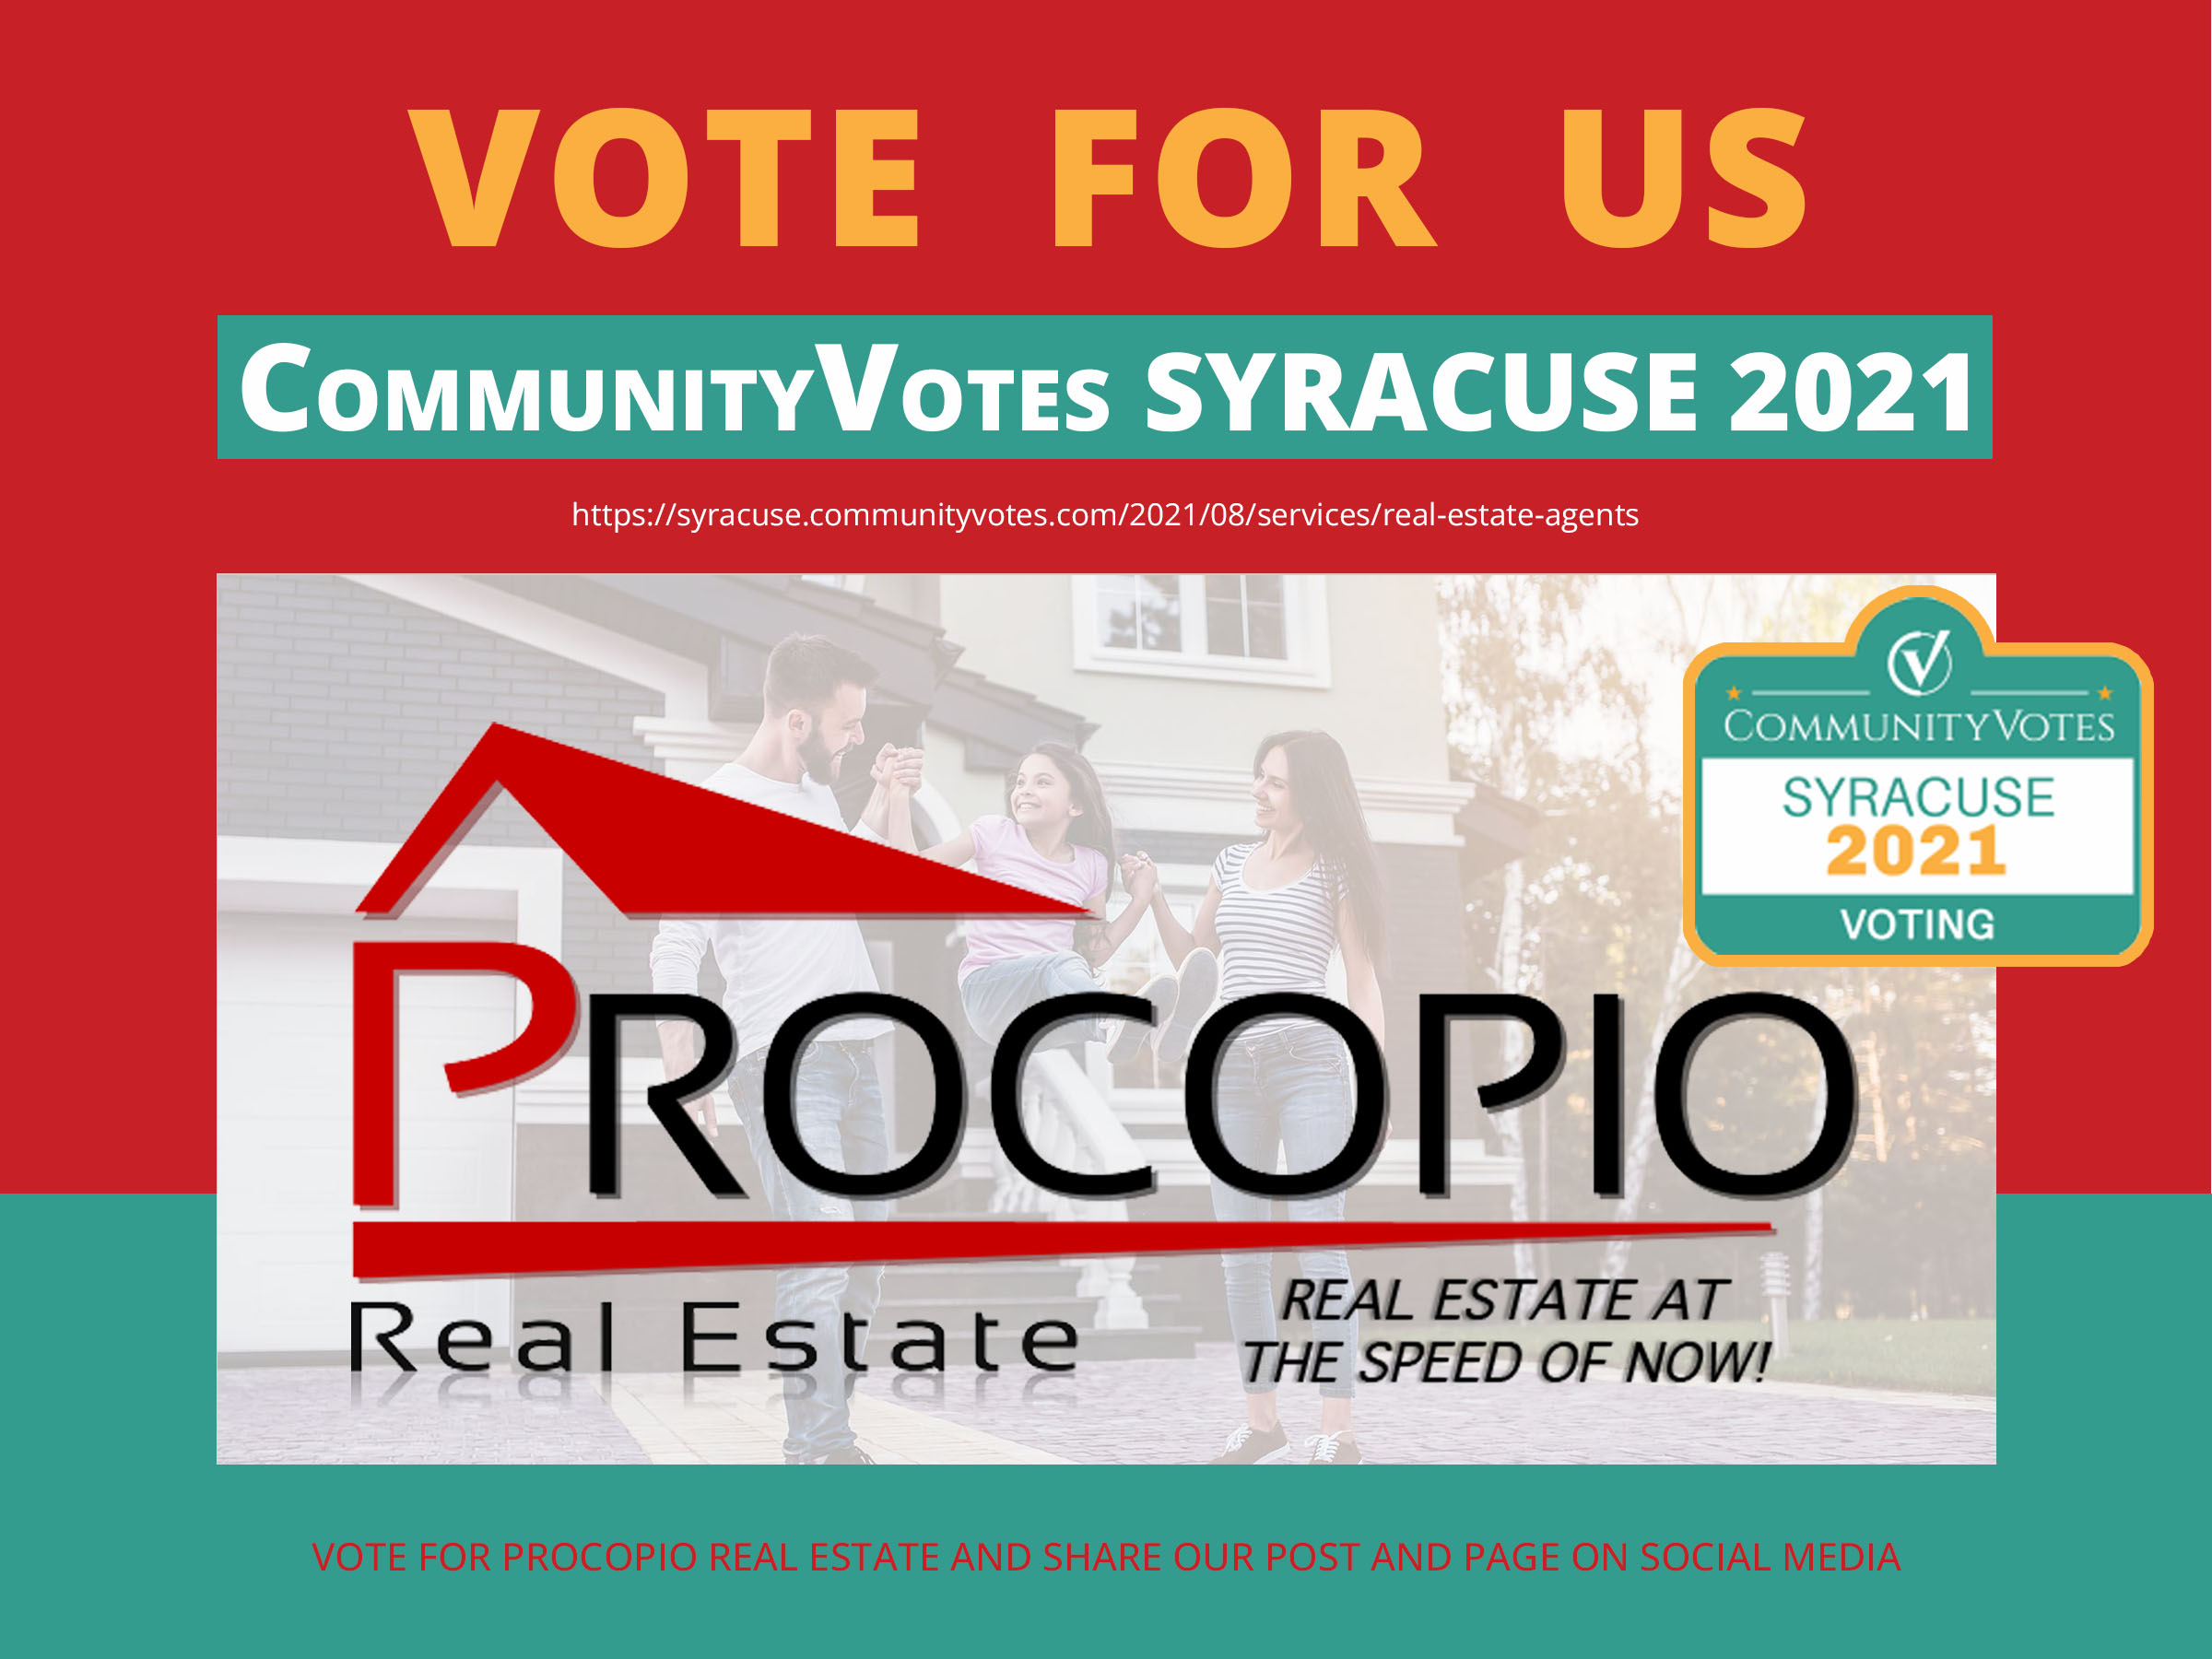 CommunityVotes_2021-Voting-geotagged.jpg